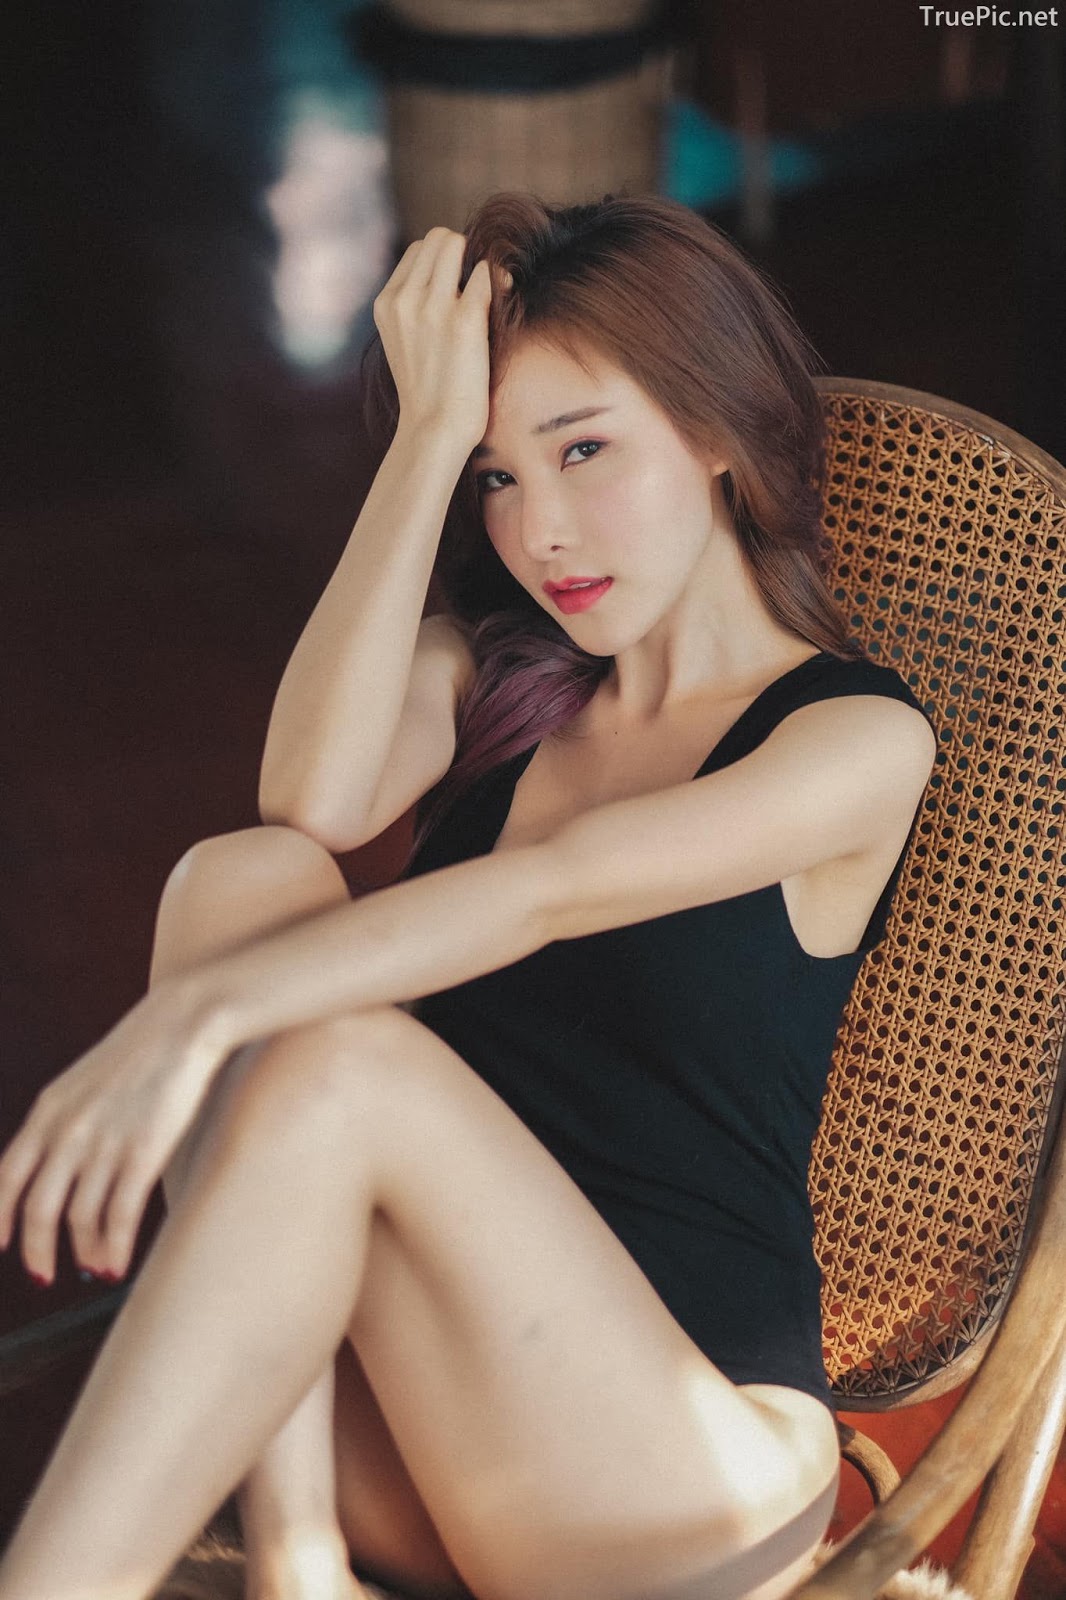 Thailand model - Arys Nam-in (Arysiacara) - Black Rose feeling the sun - Picture 15